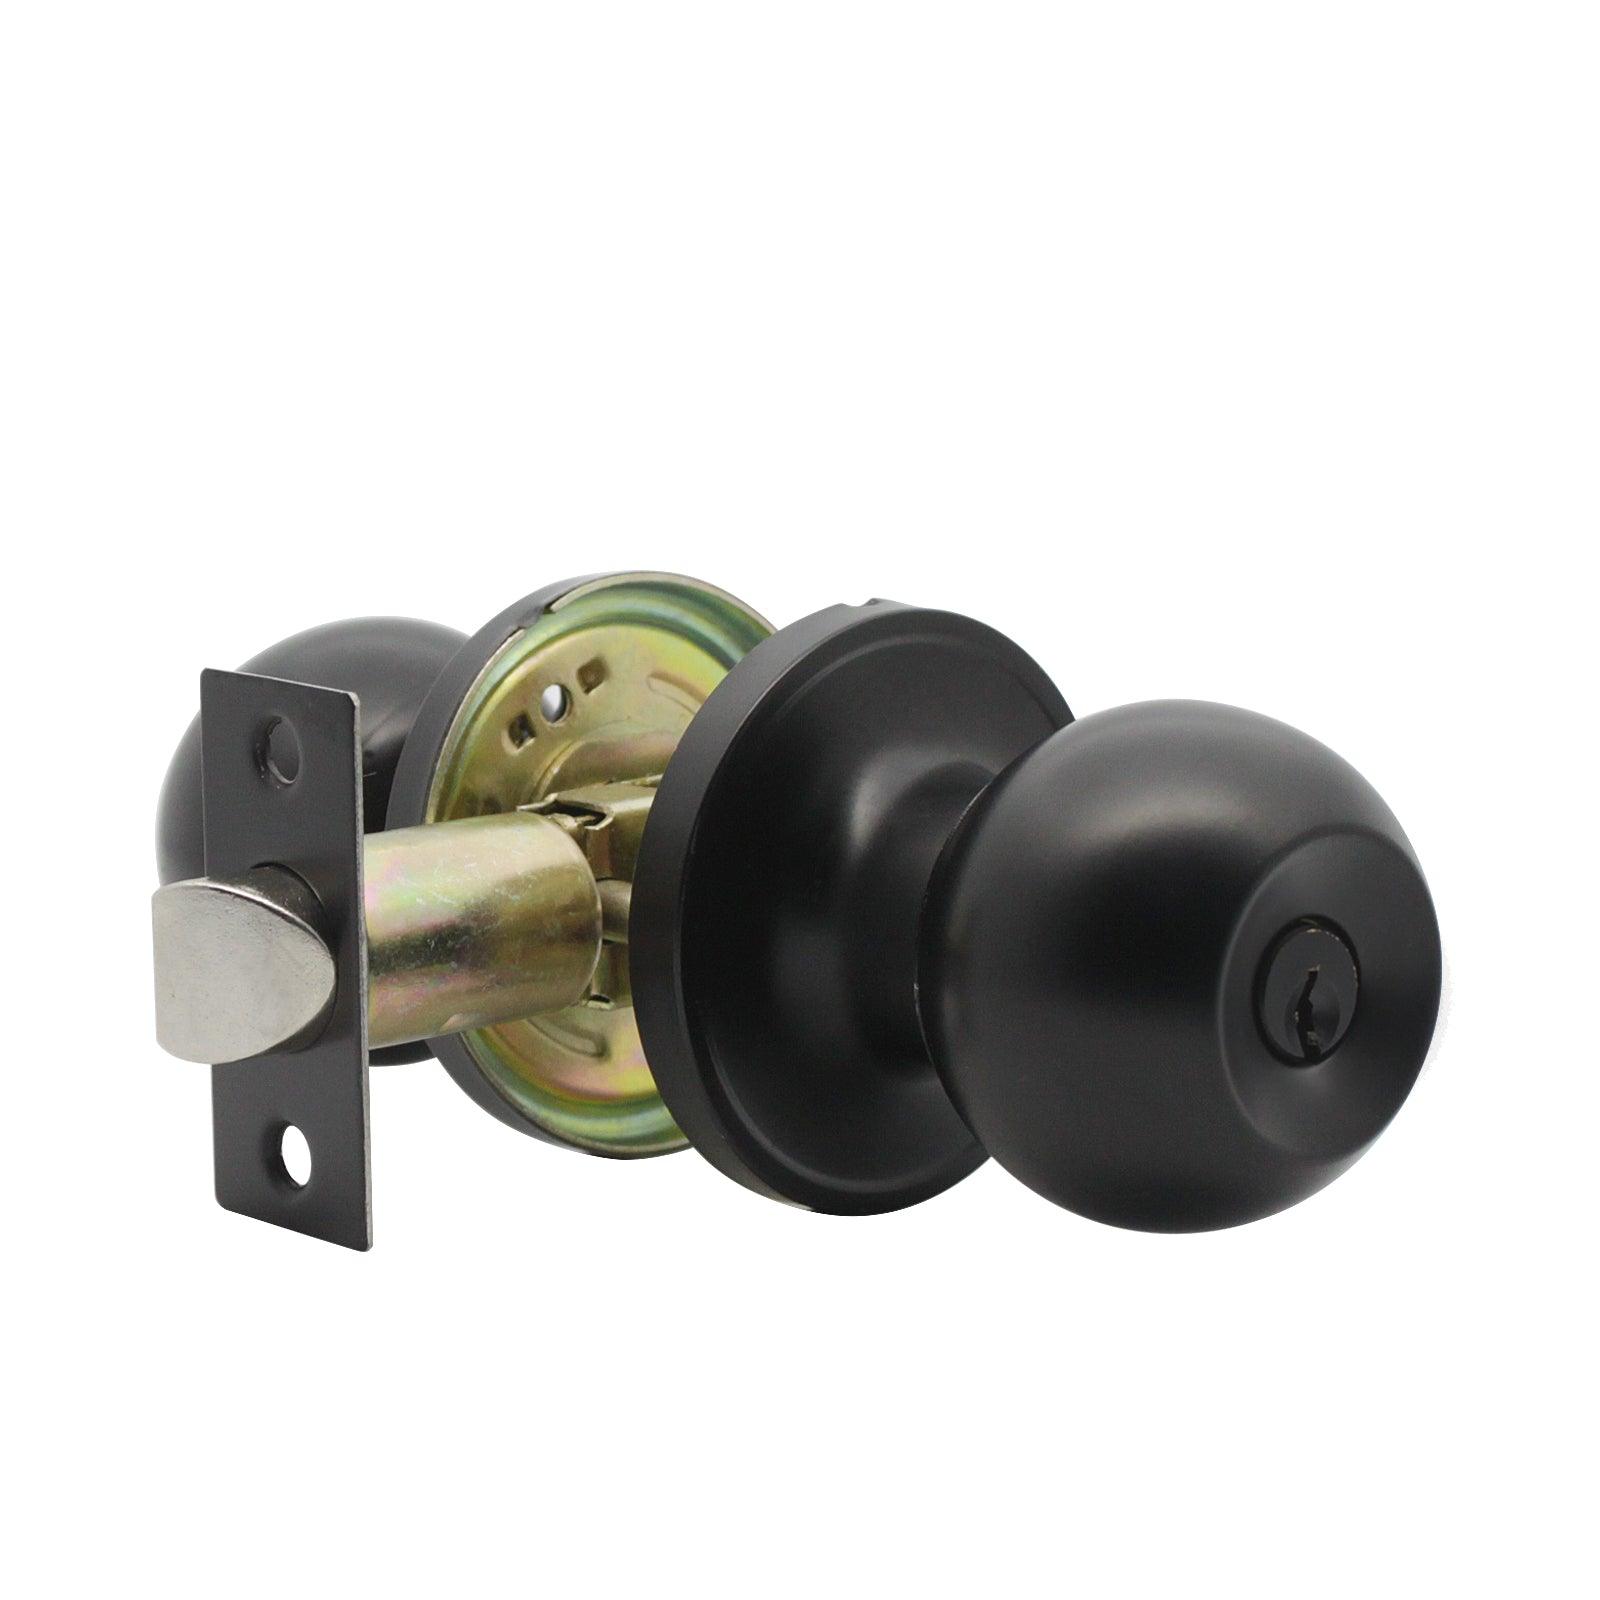 Round Ball Knobs Keyed Alike/Keyed Entry/Privacy/Passage/Dummy Door Lock Knob, Black Finish DL607BK